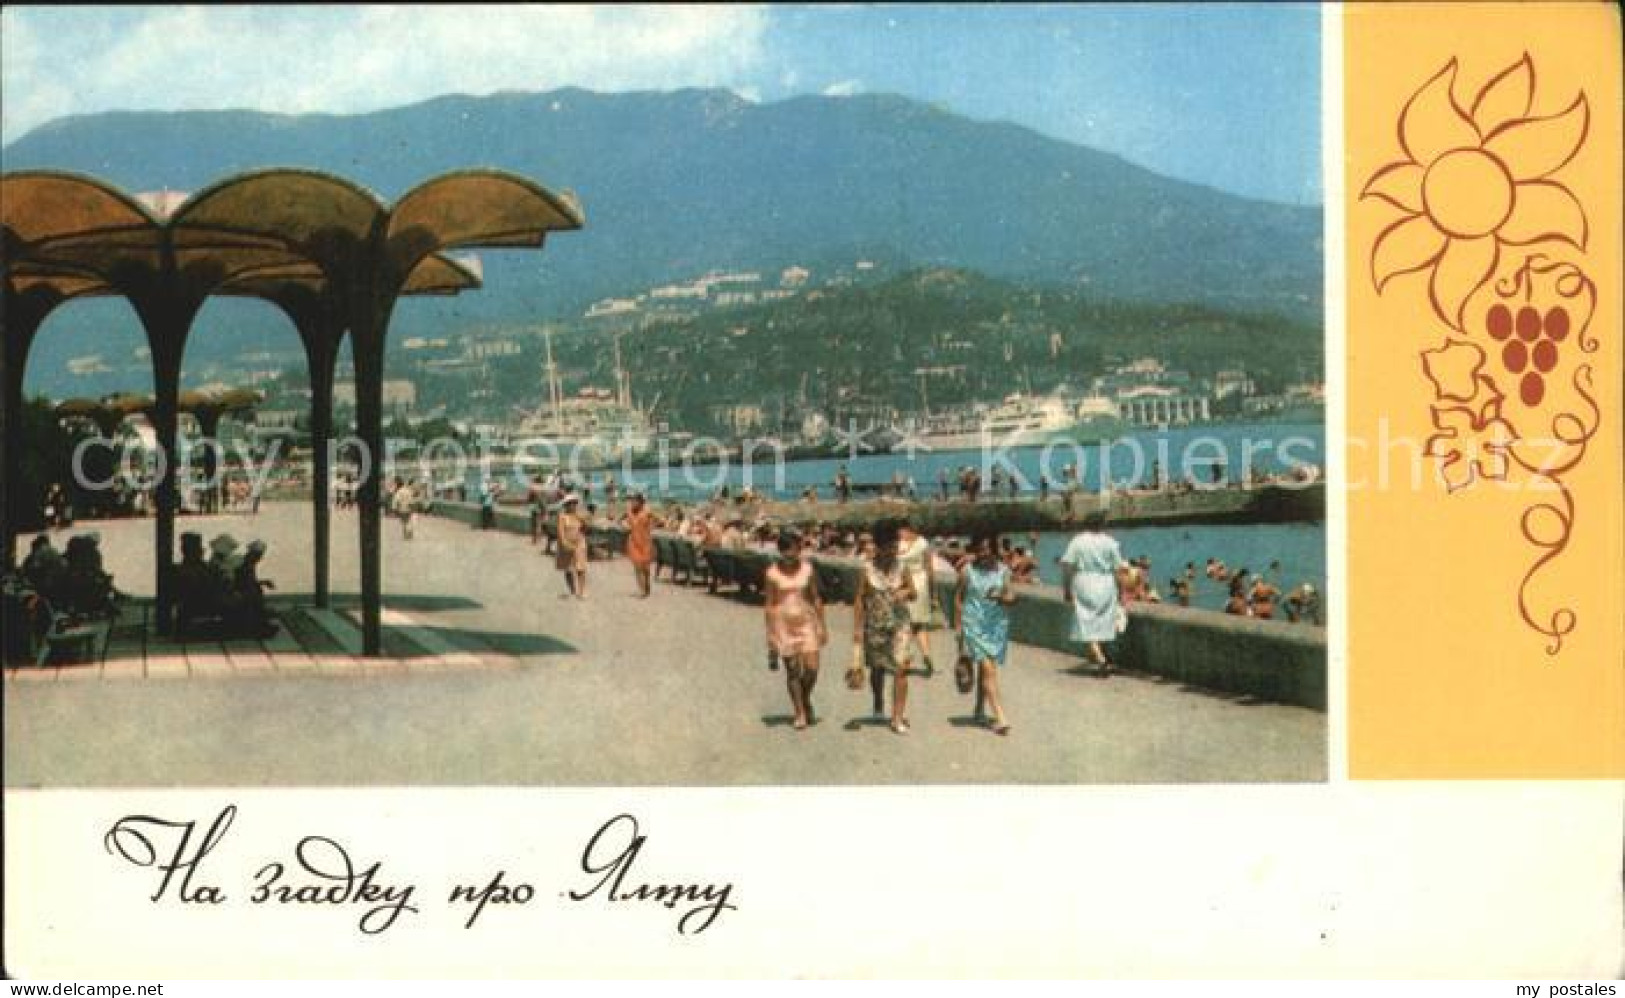 72541330 Jalta Yalta Krim Crimea Promenade   - Ukraine